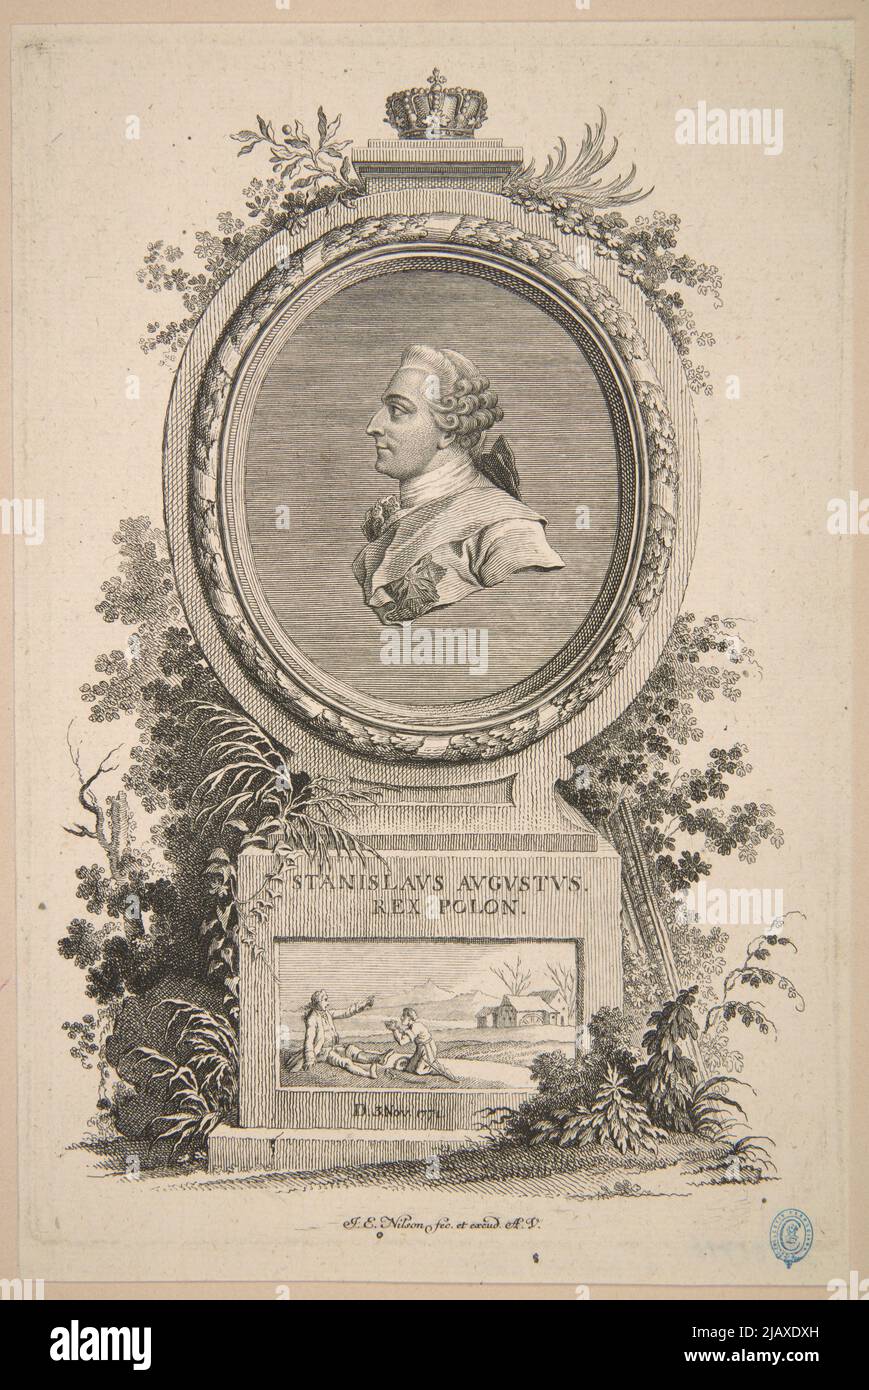 Stanislaus Augustus rex Polon. [Stanisław August Poniatowski] Nilson, Johann Esaias (1721 1788) Stock Photo